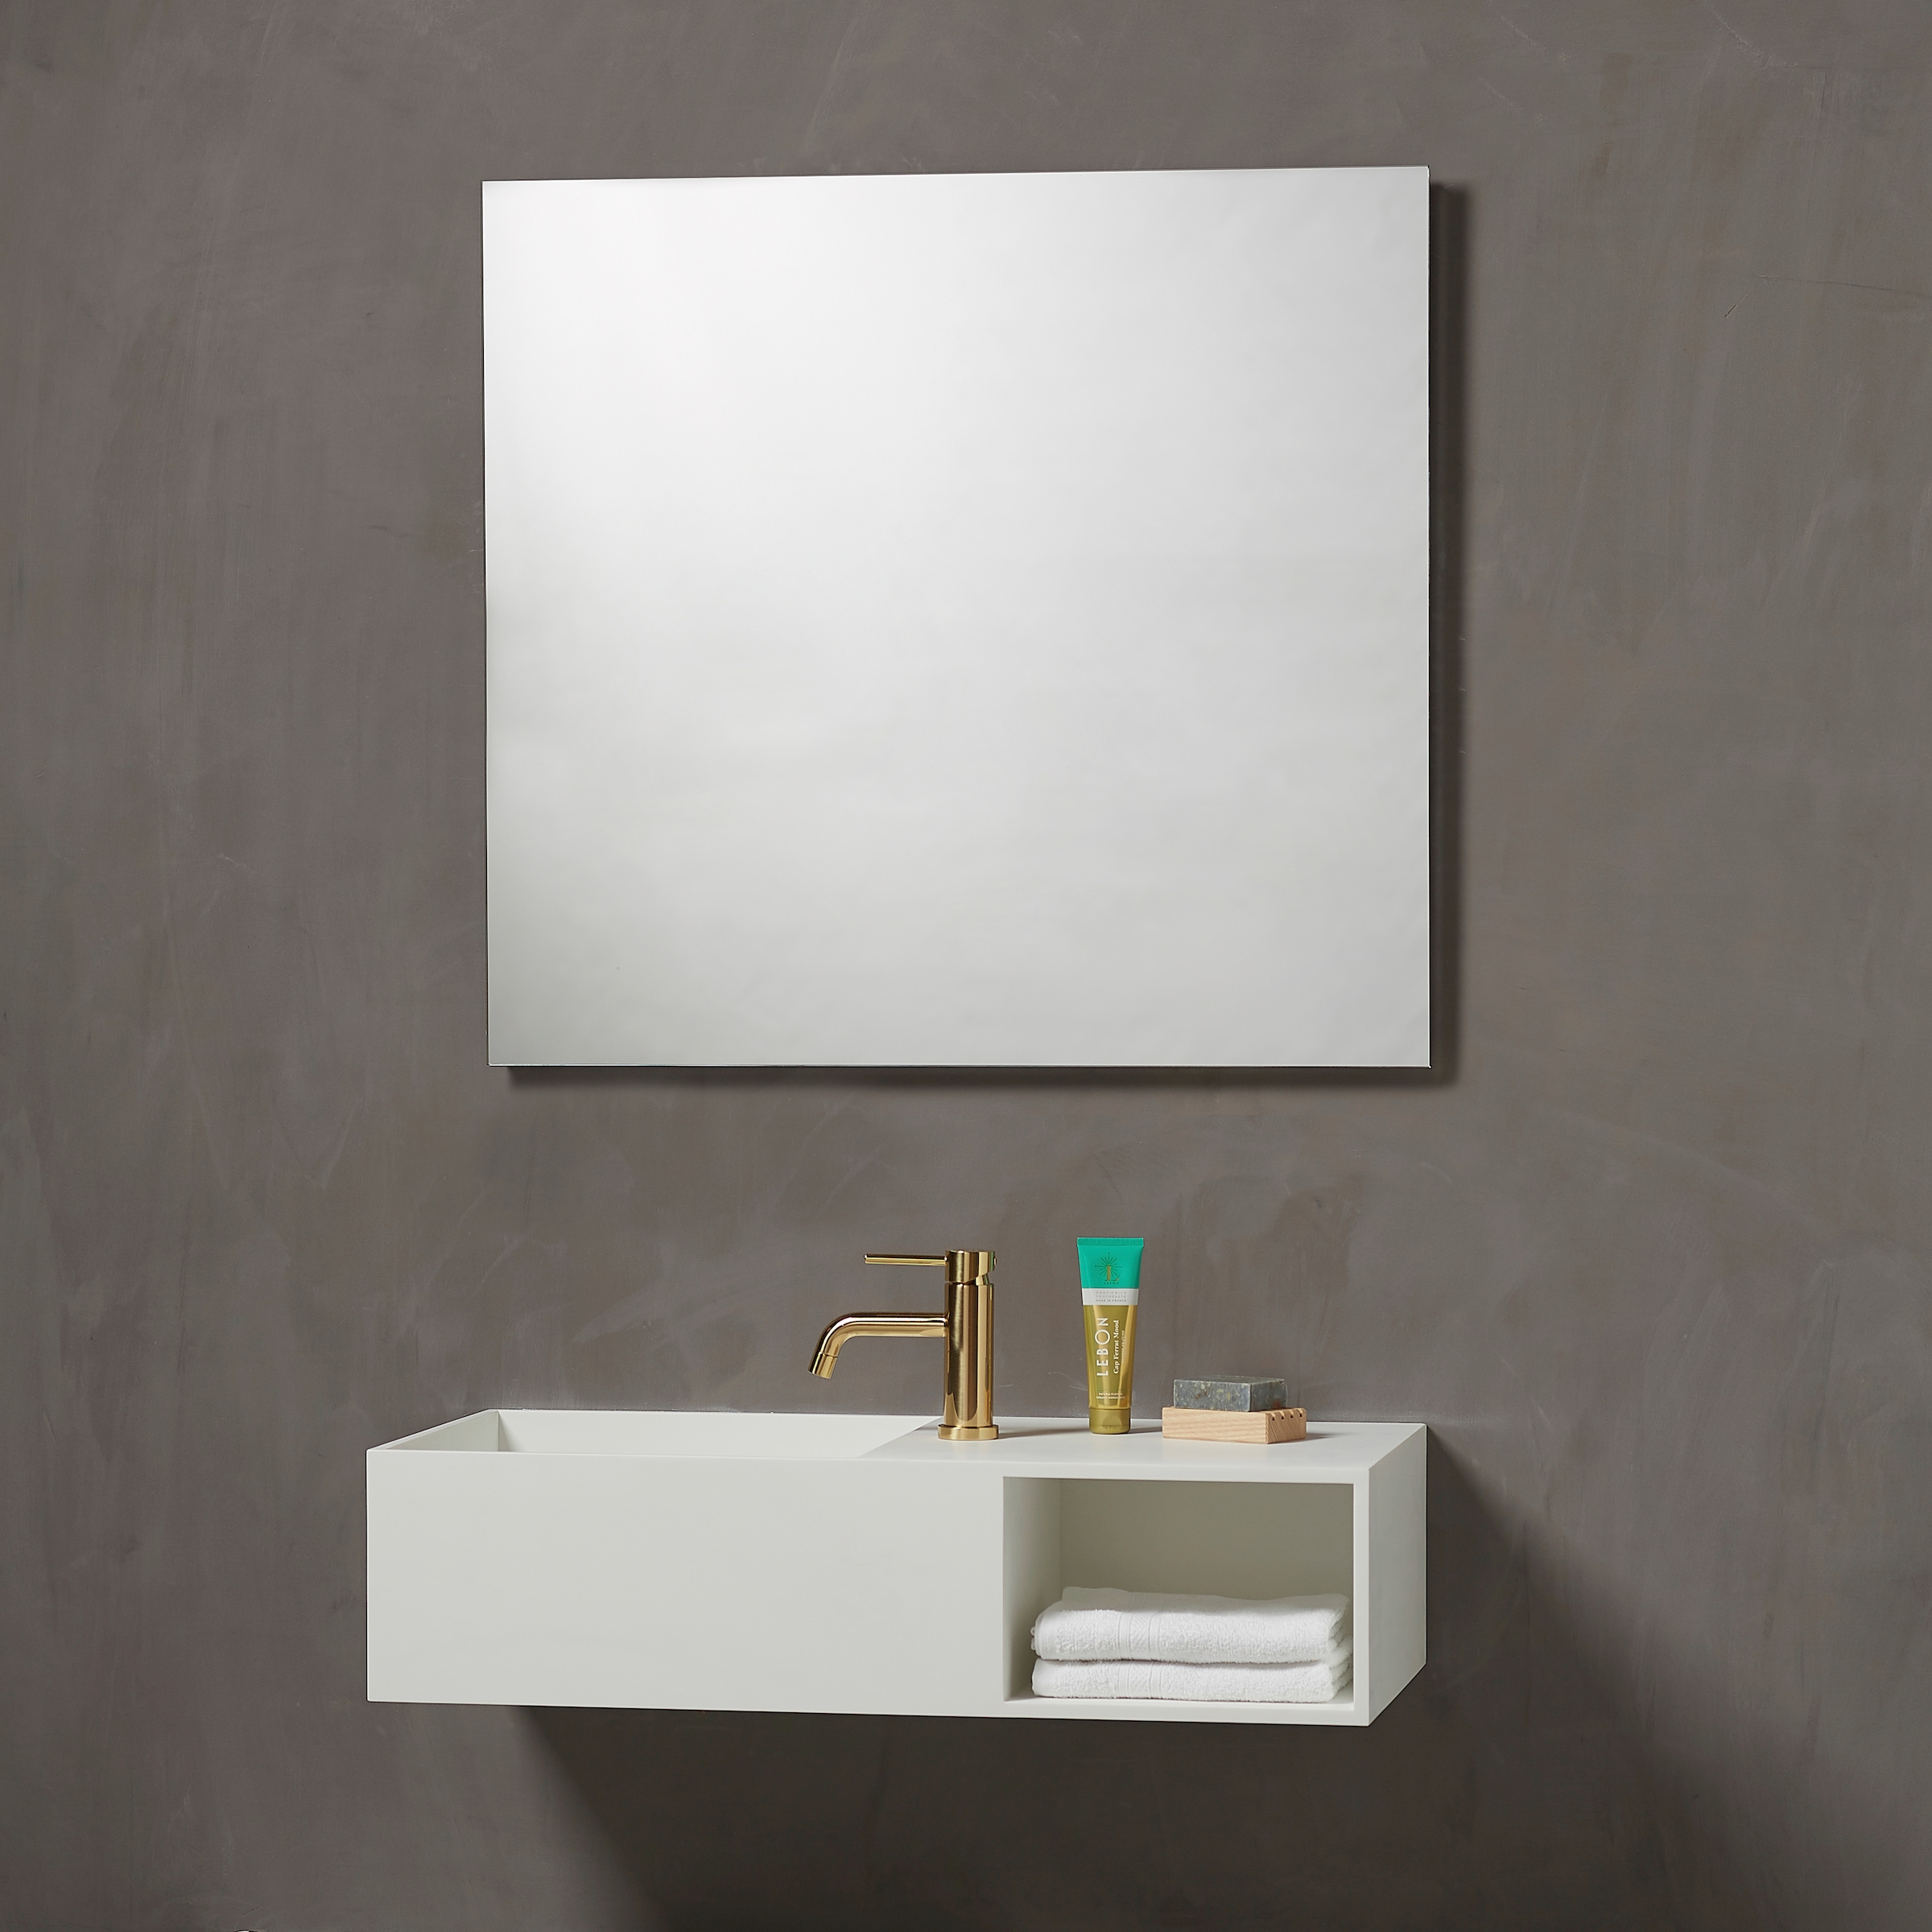 Loevschall Badspiegel »Vejle«, 75x80 cm, mit Beleuchtung